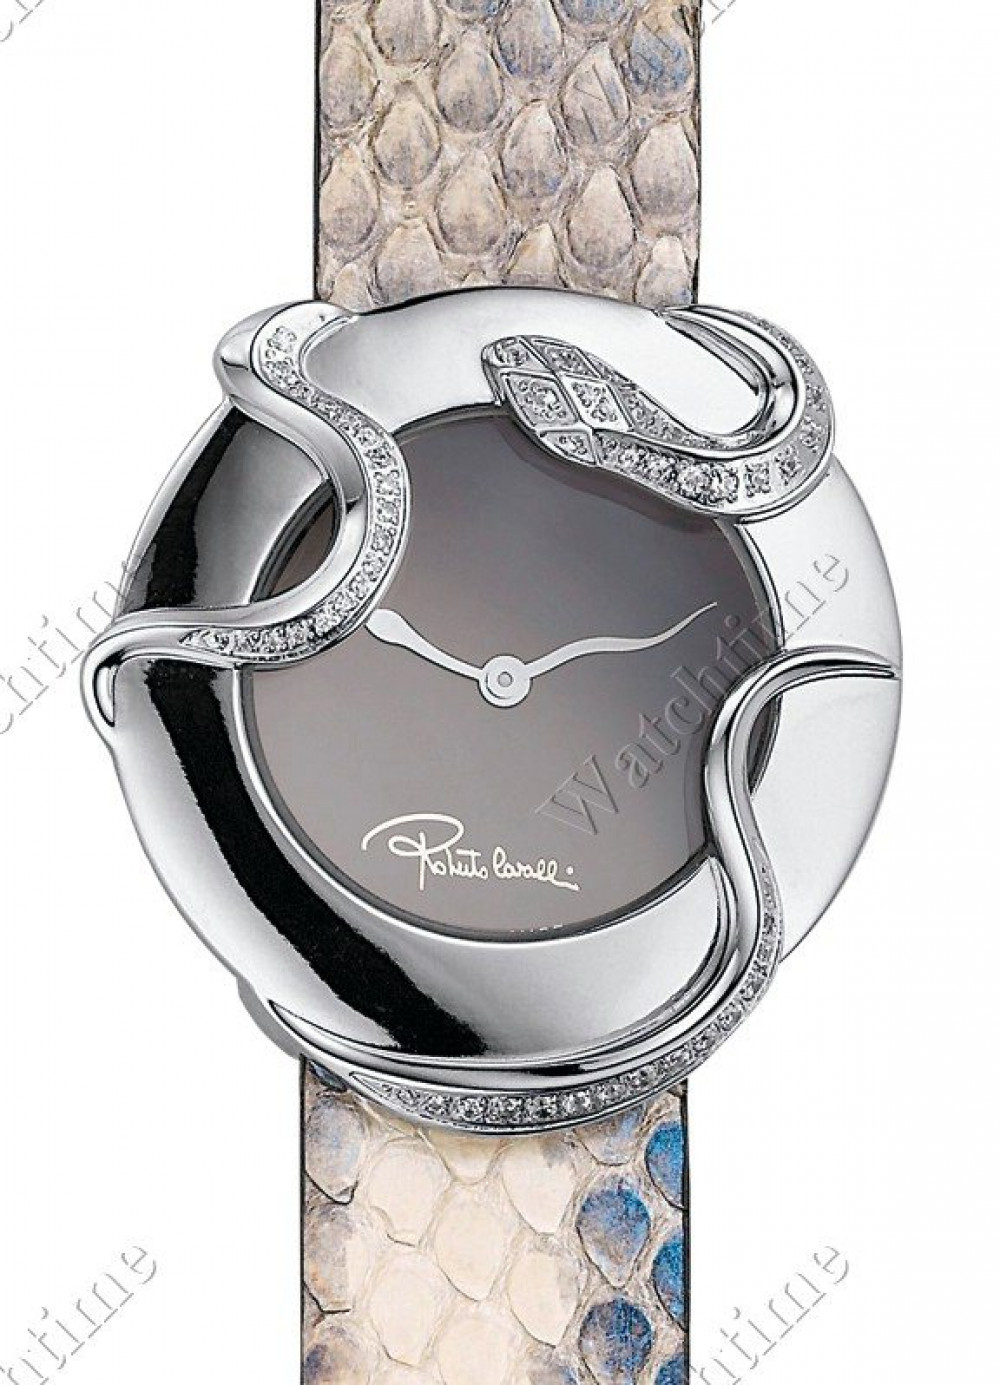 Zegarek firmy Roberto Cavalli Timewear, model Snake Diamonds